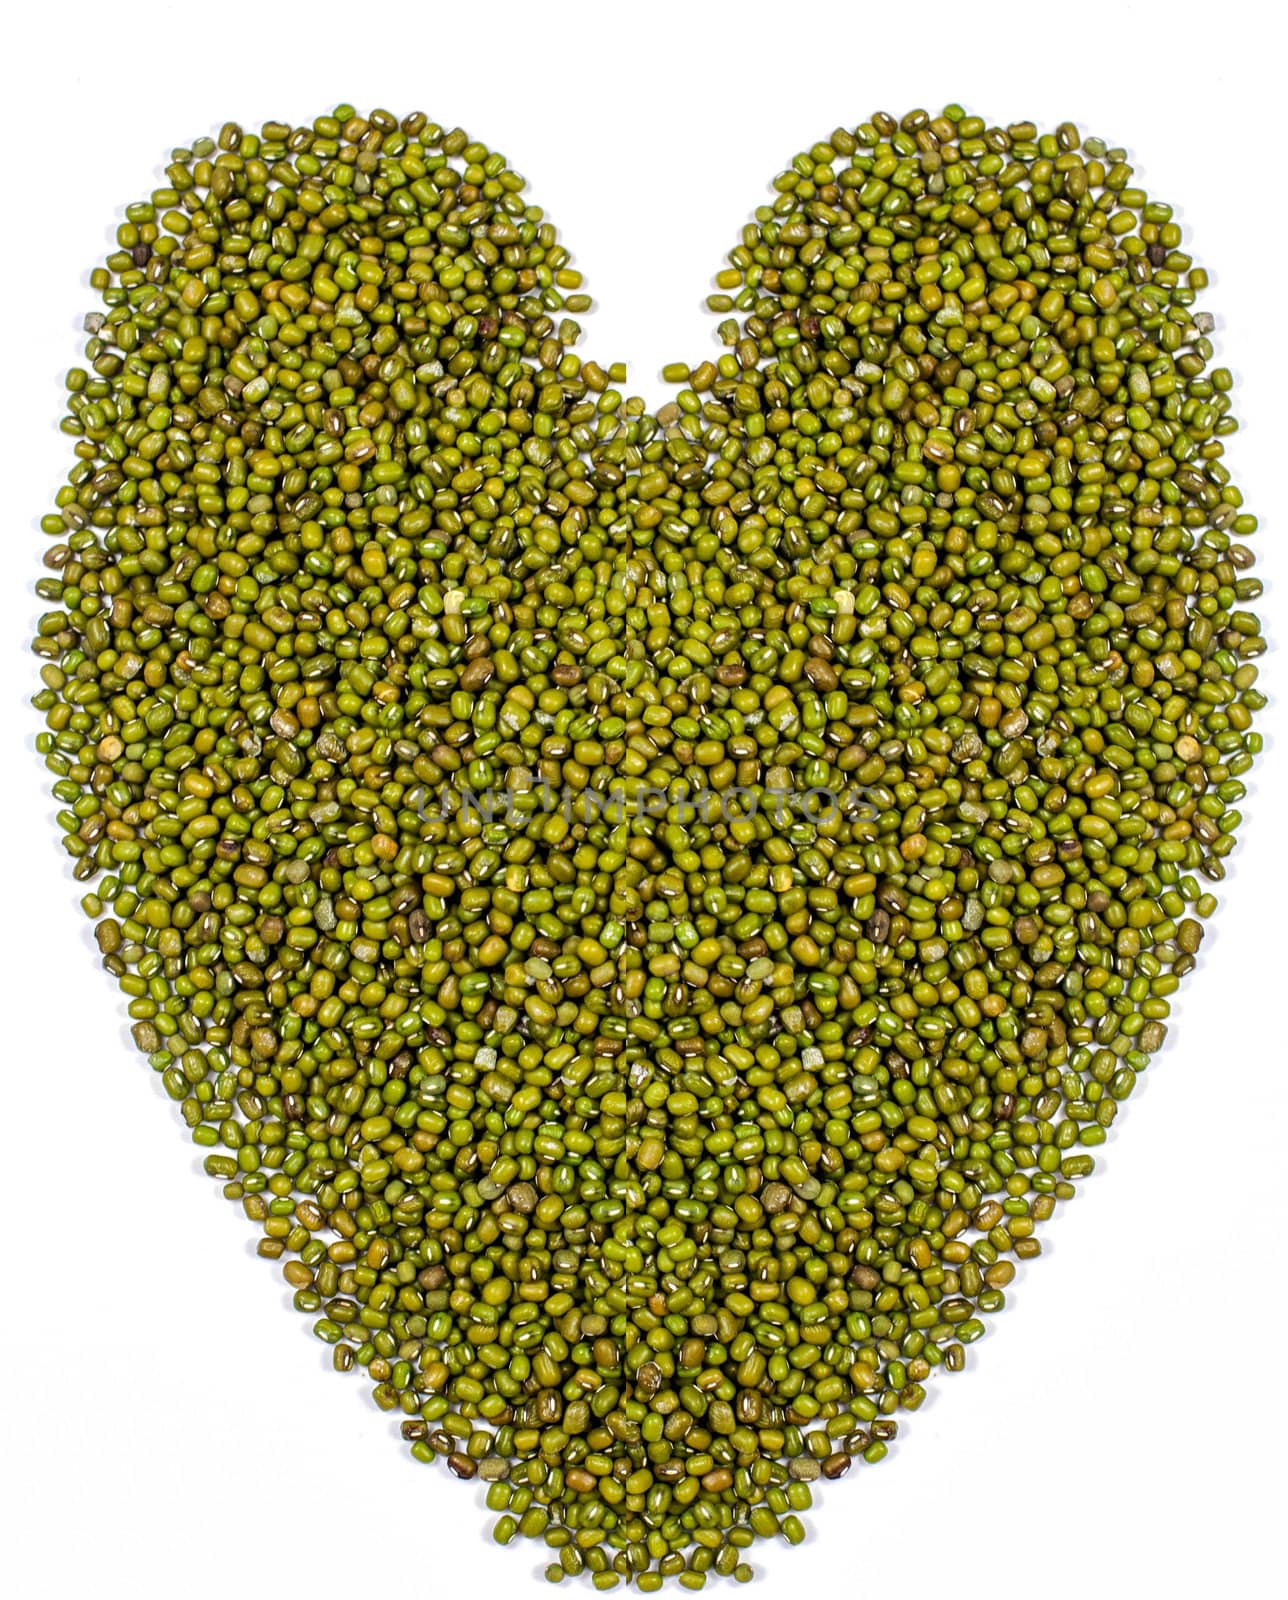 Green beans by thanatip